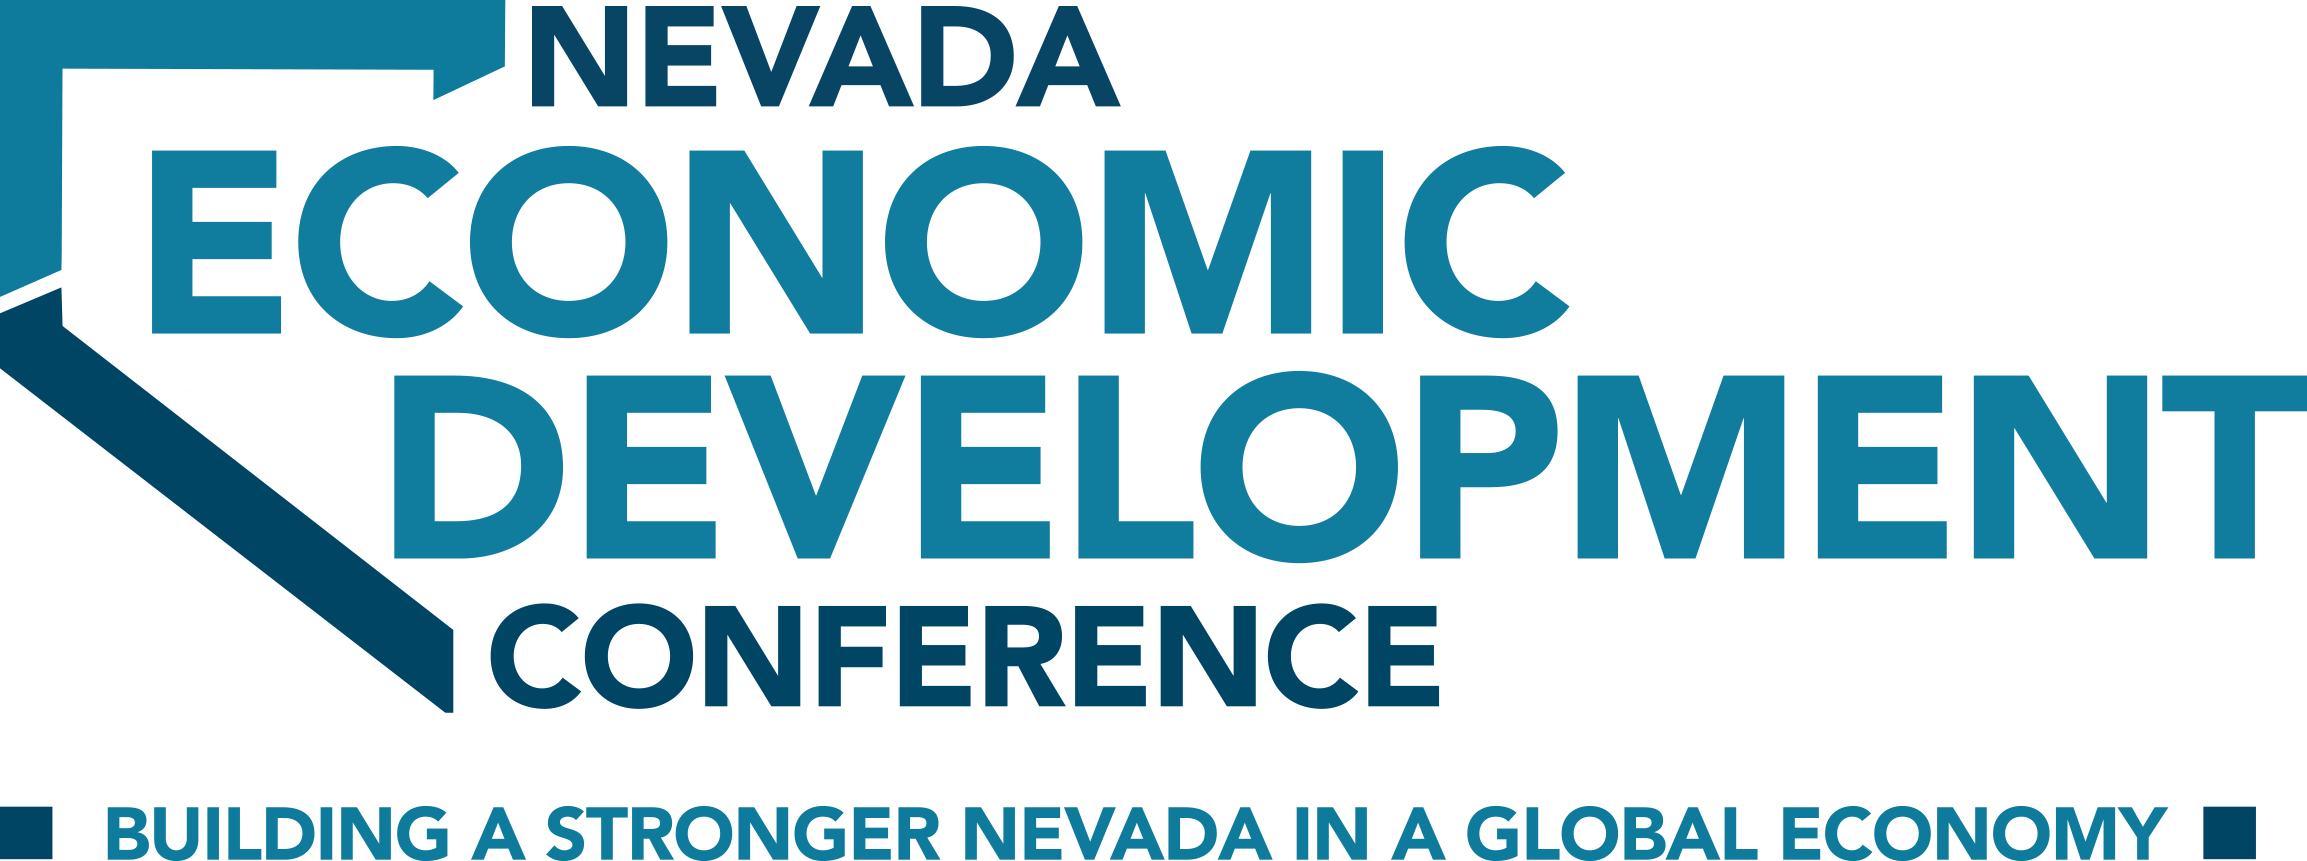 Nevada Economic Development Conference 2017